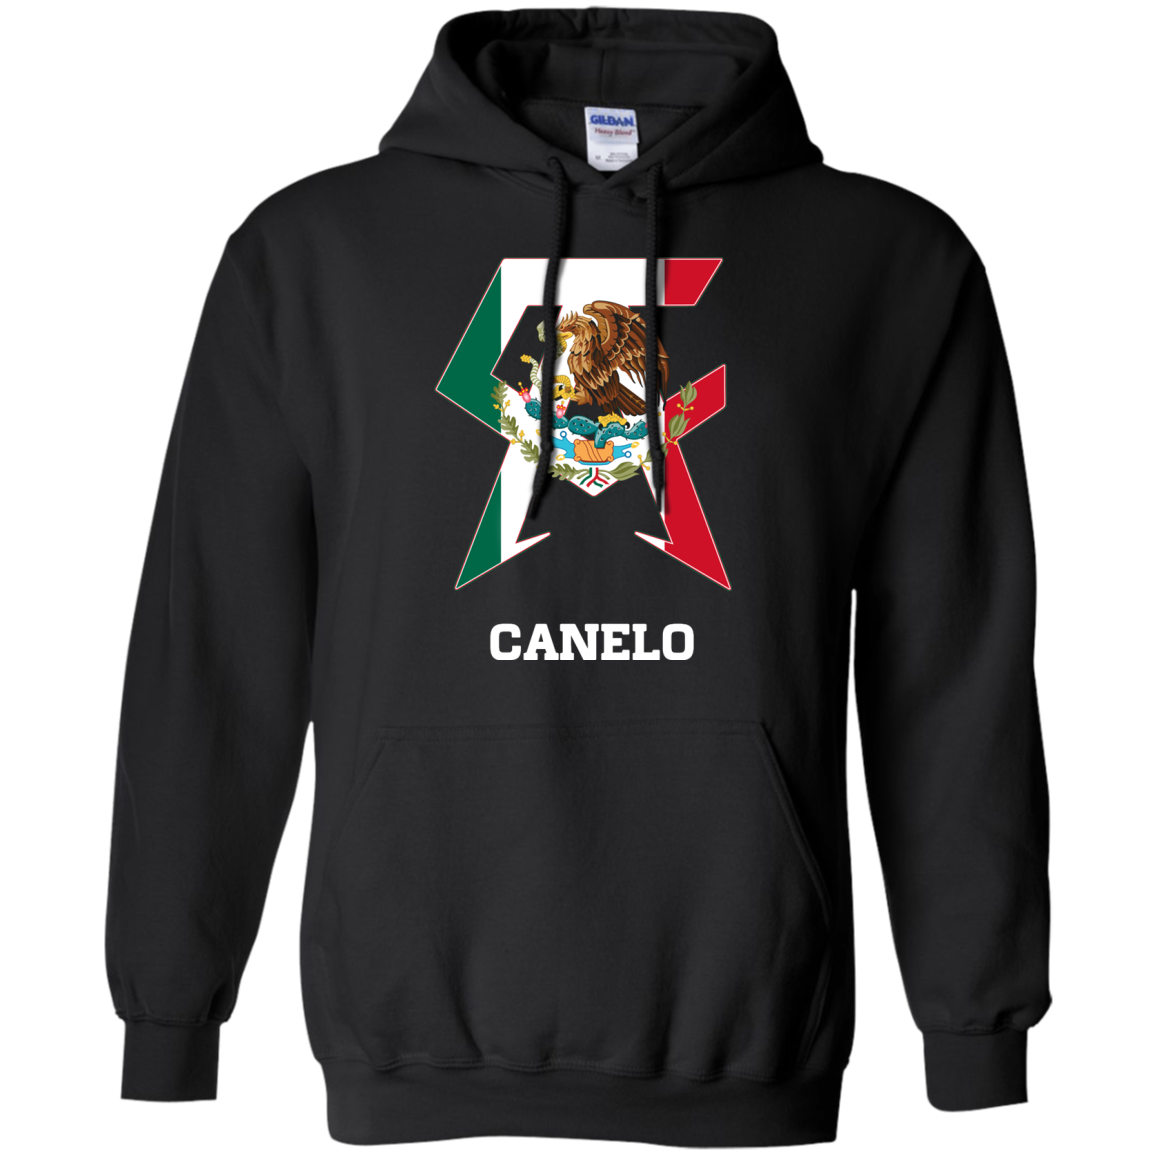 Team Canelo Alvarez tshirt, vneck, tank, hoodie, long sleeve